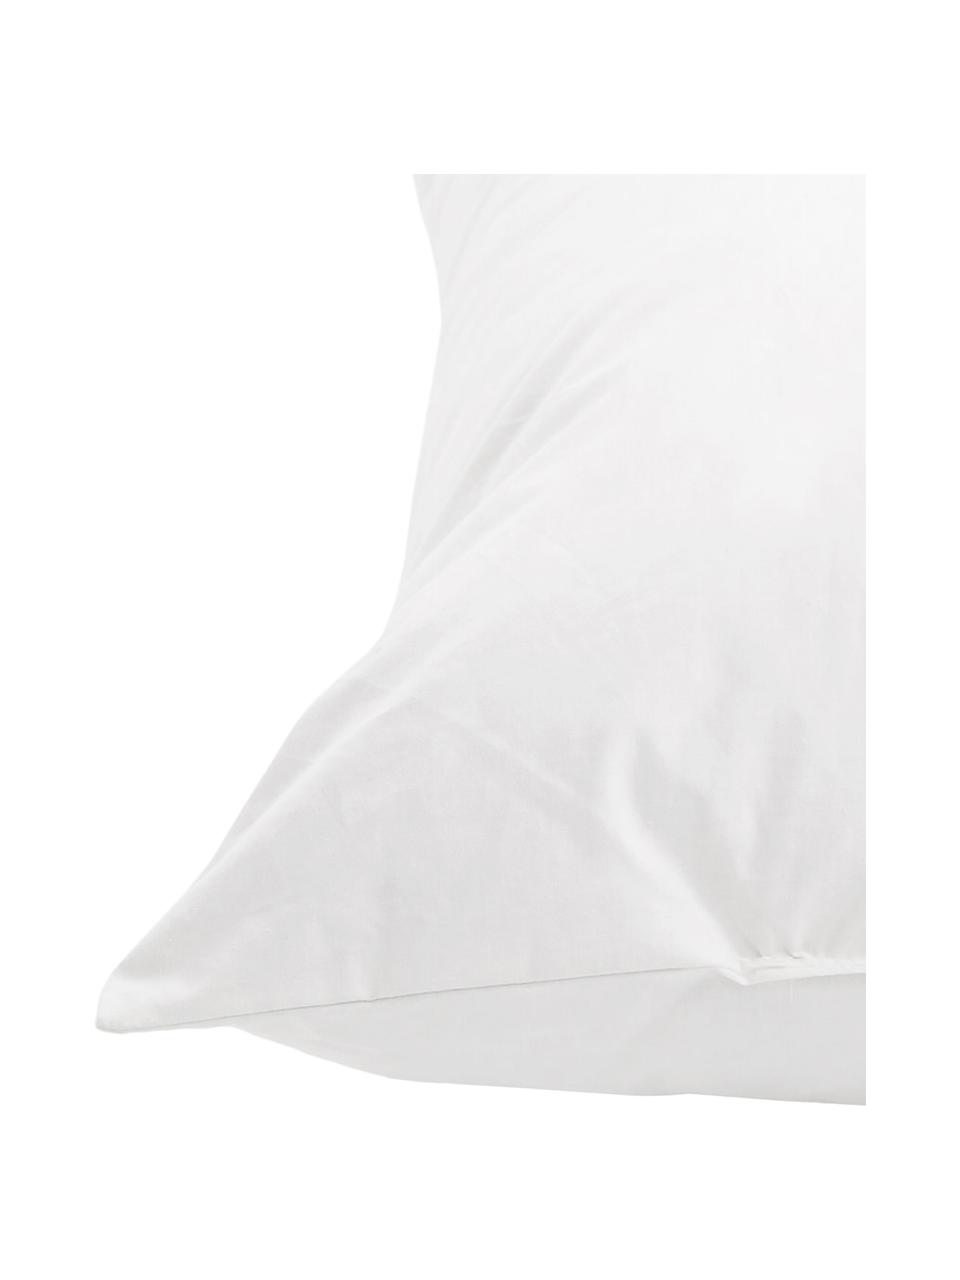 Kissen-Inlett Comfort, 45x45, Feder-Füllung, Bezug: Feinköper, 100% Baumwolle, Weiß, 45 x 45 cm